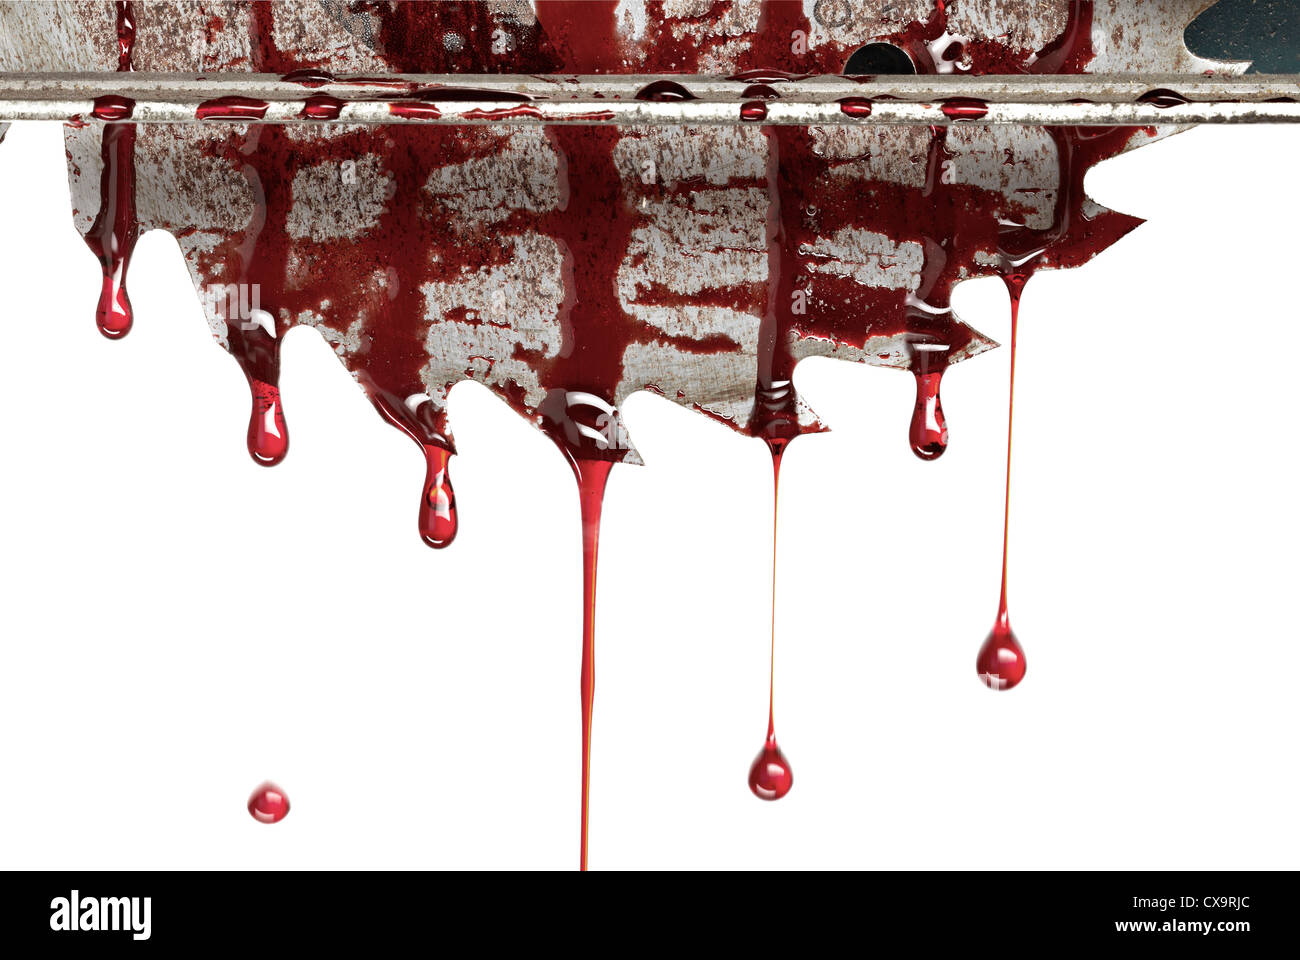 Blood Wallpaper  Blood Png Image png download  34811708  Free  Transparent Blood png Download  Clip Art Library